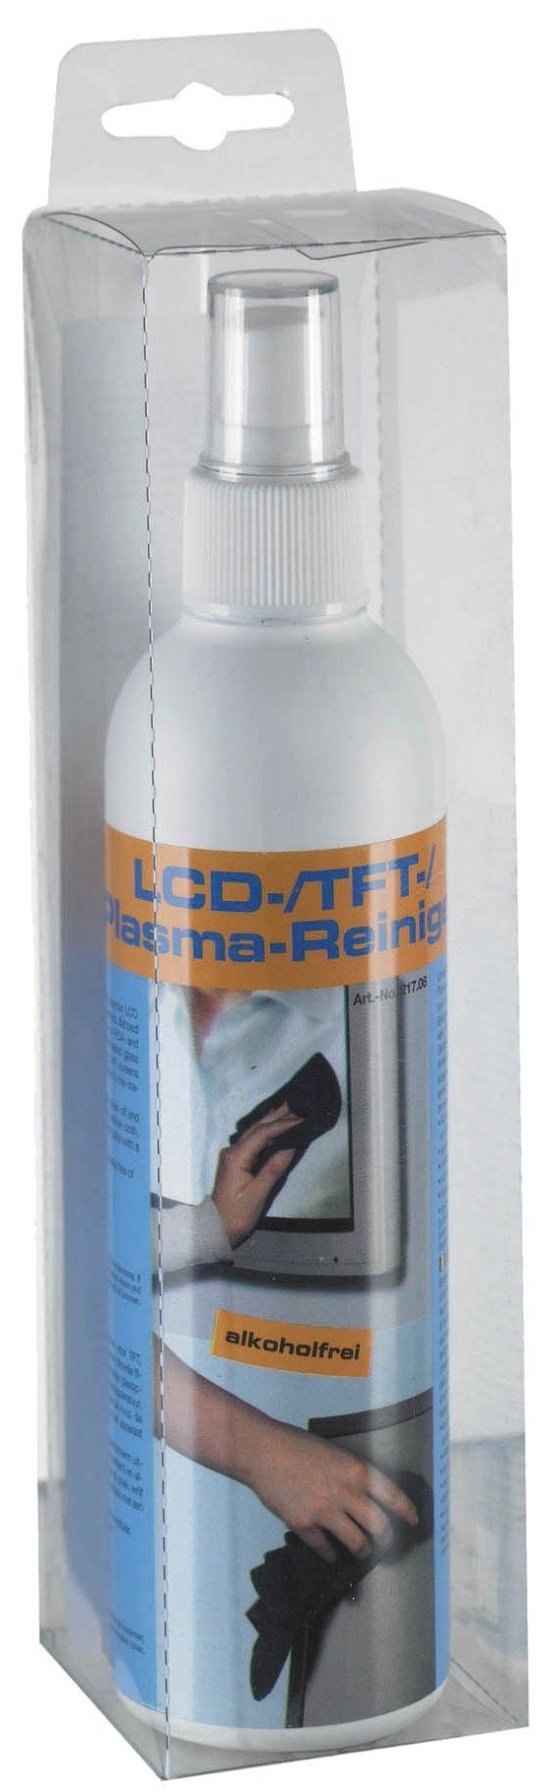 Lcd / tft / plasma Cleaning Pumpspray - Lcd / tft / plasma Cleaning Pumpspray 250ml - Beco (AVACC) - Lcd / tft / plasma Cleaning Pumpspray - Merchandise - Beco - 4000976217064 - 